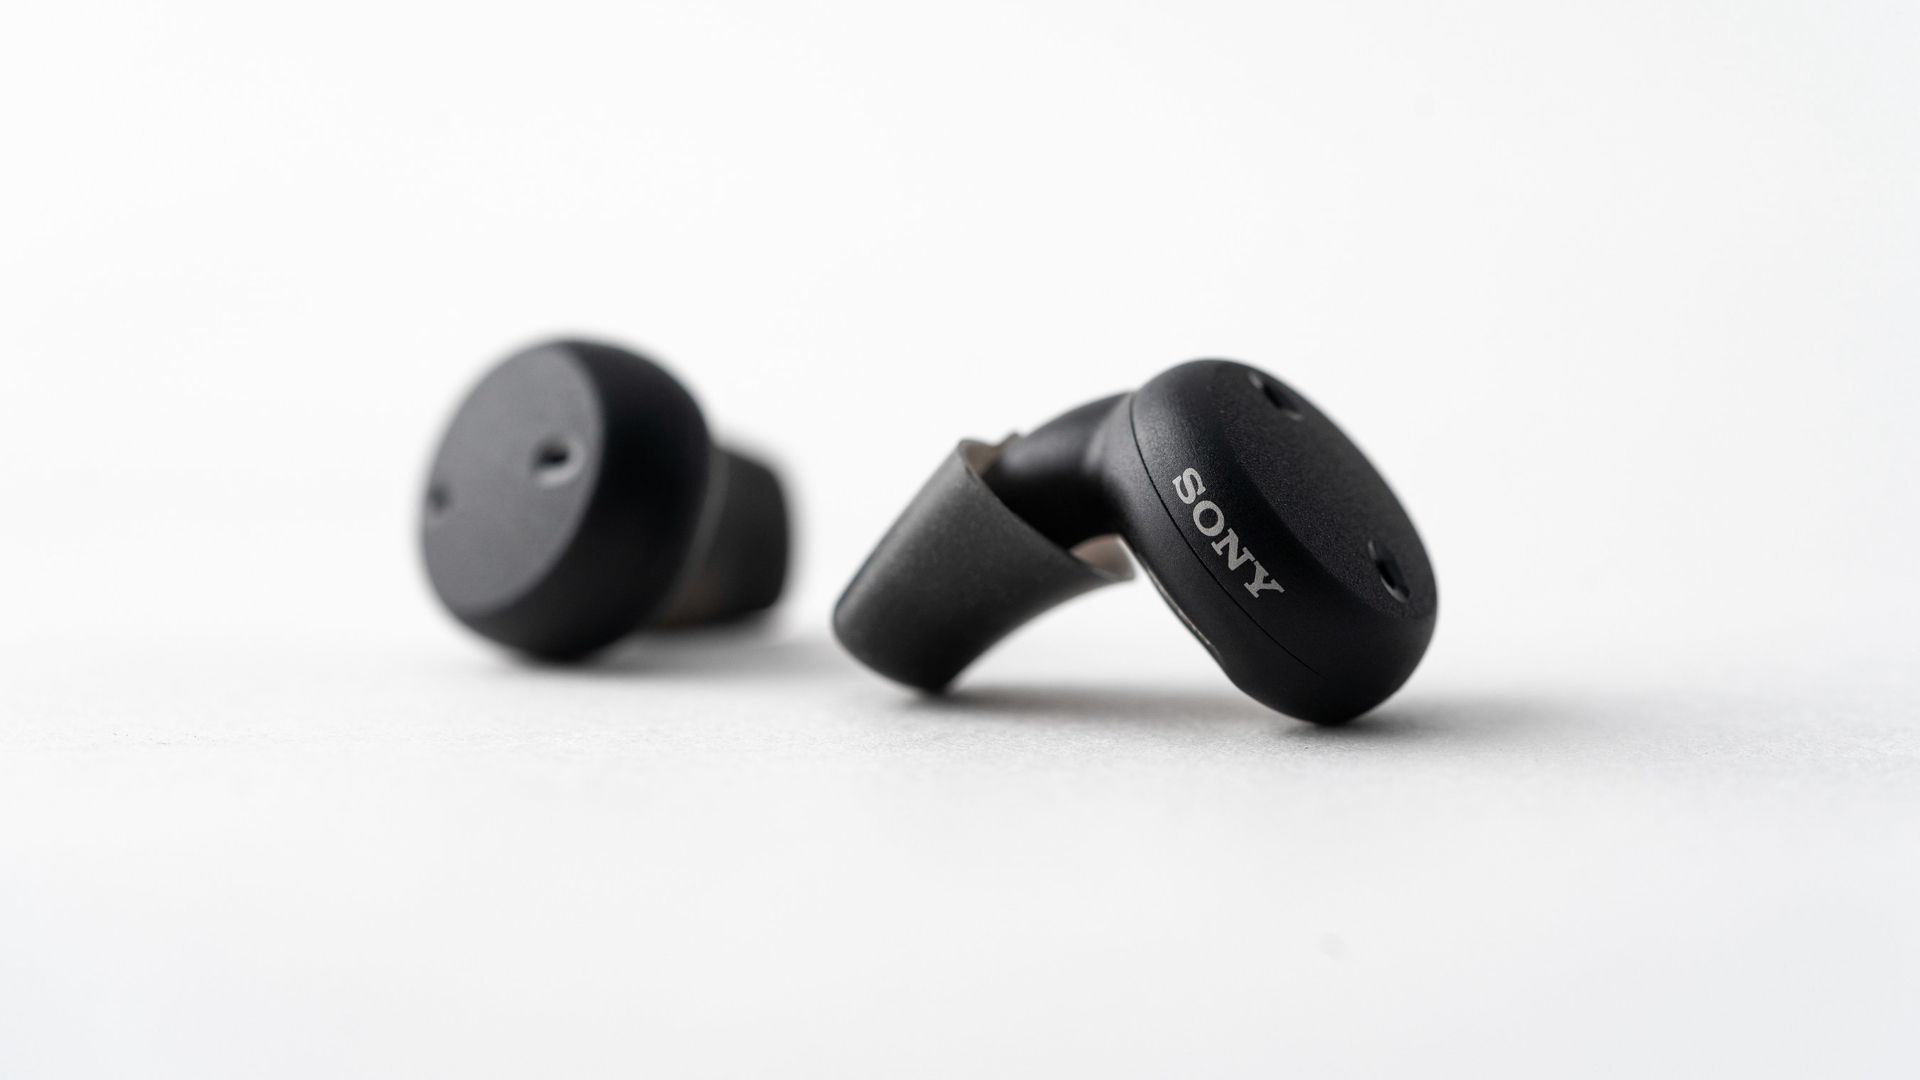 Sony OTC hearing aids